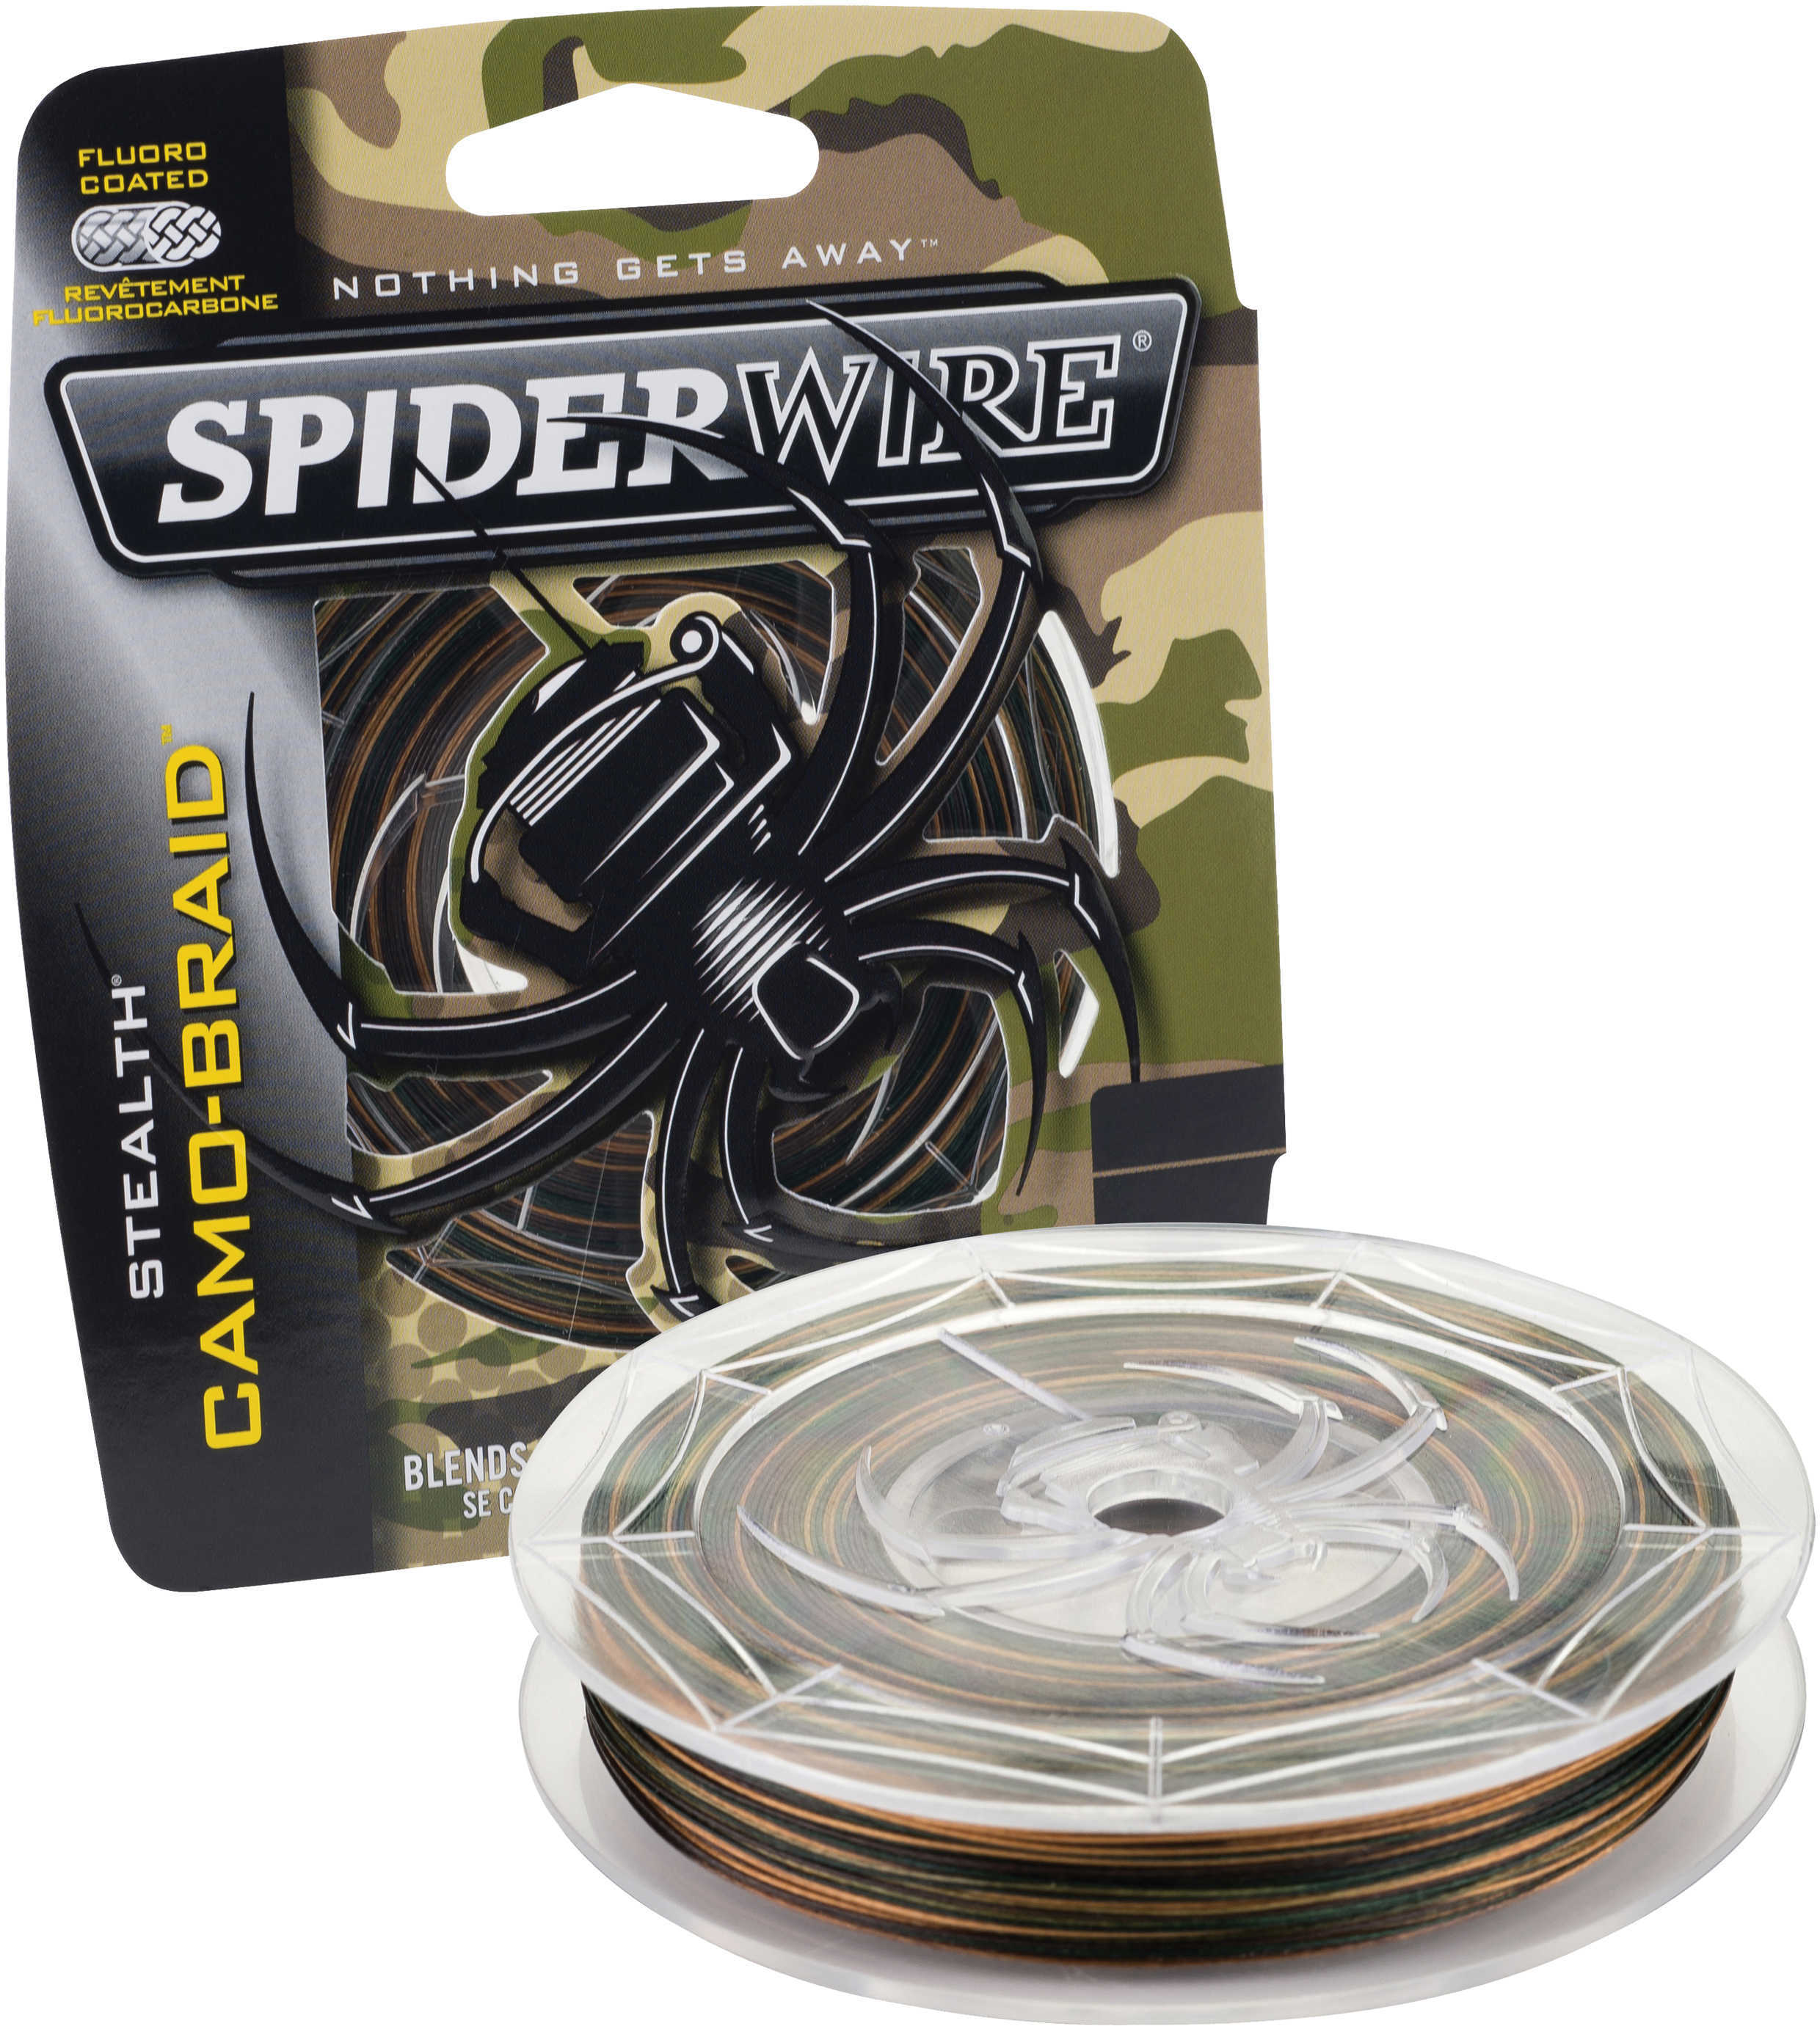 Spiderwire Stealth Braid, Camo 30 lb, 300 Yards Md: 1339796